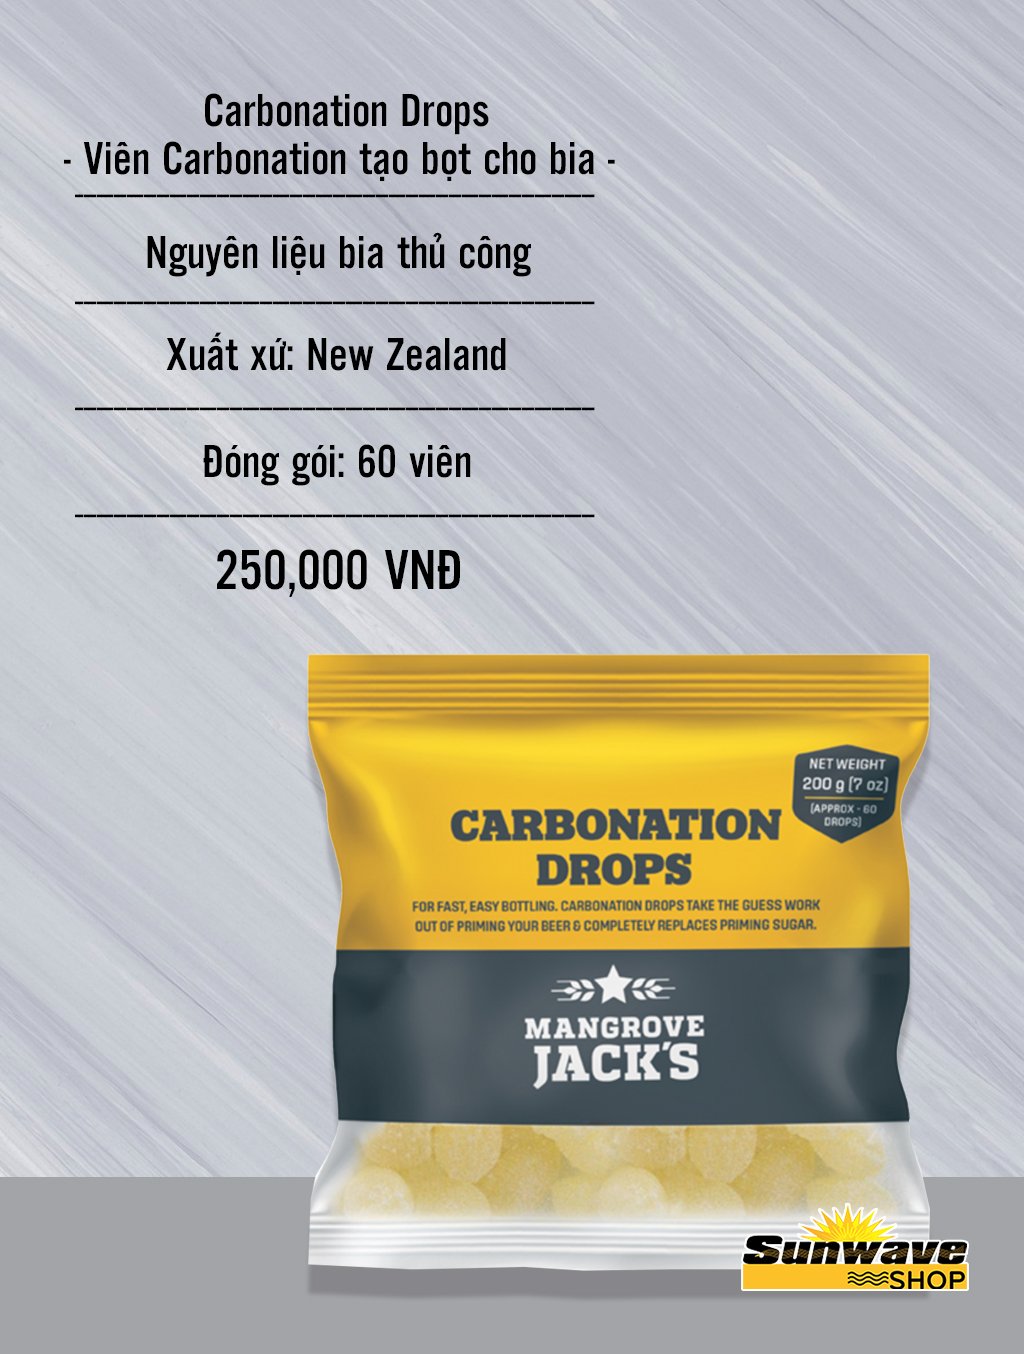 Carbonations drops - Viên carbonation tạo bọt bia hơi